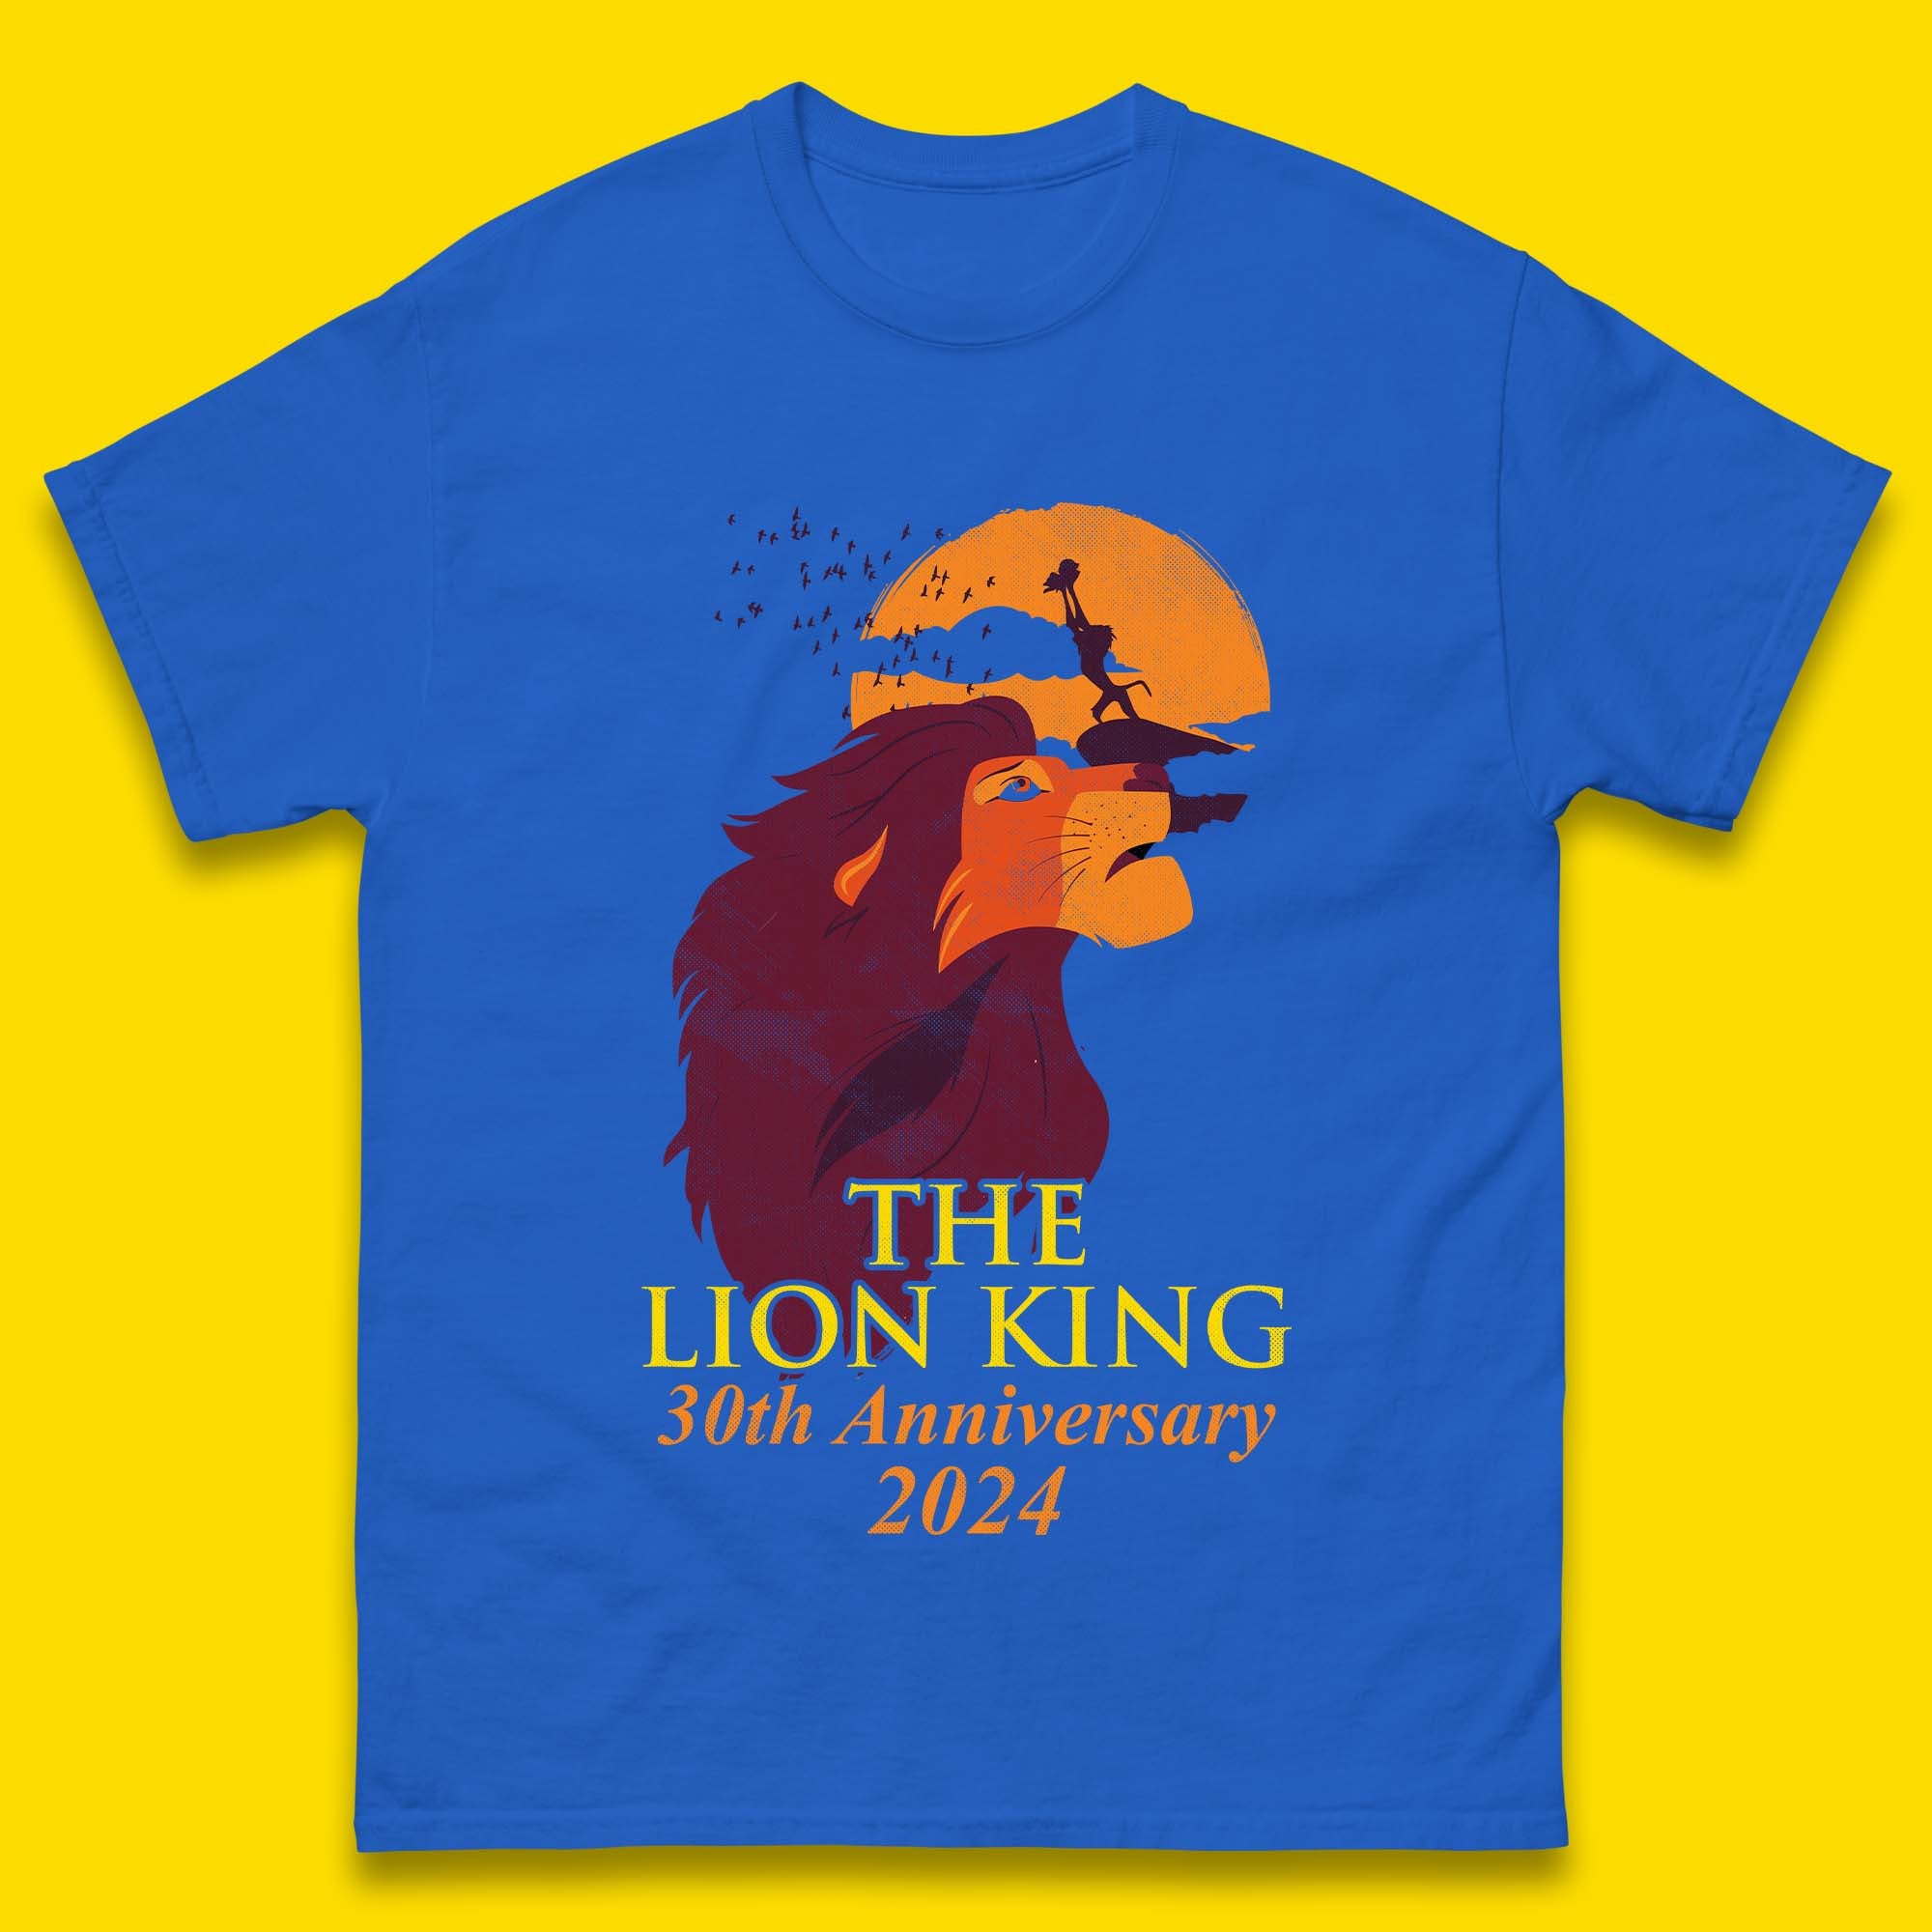 The Lion King 30th Anniversary 2024 Mens T-Shirt